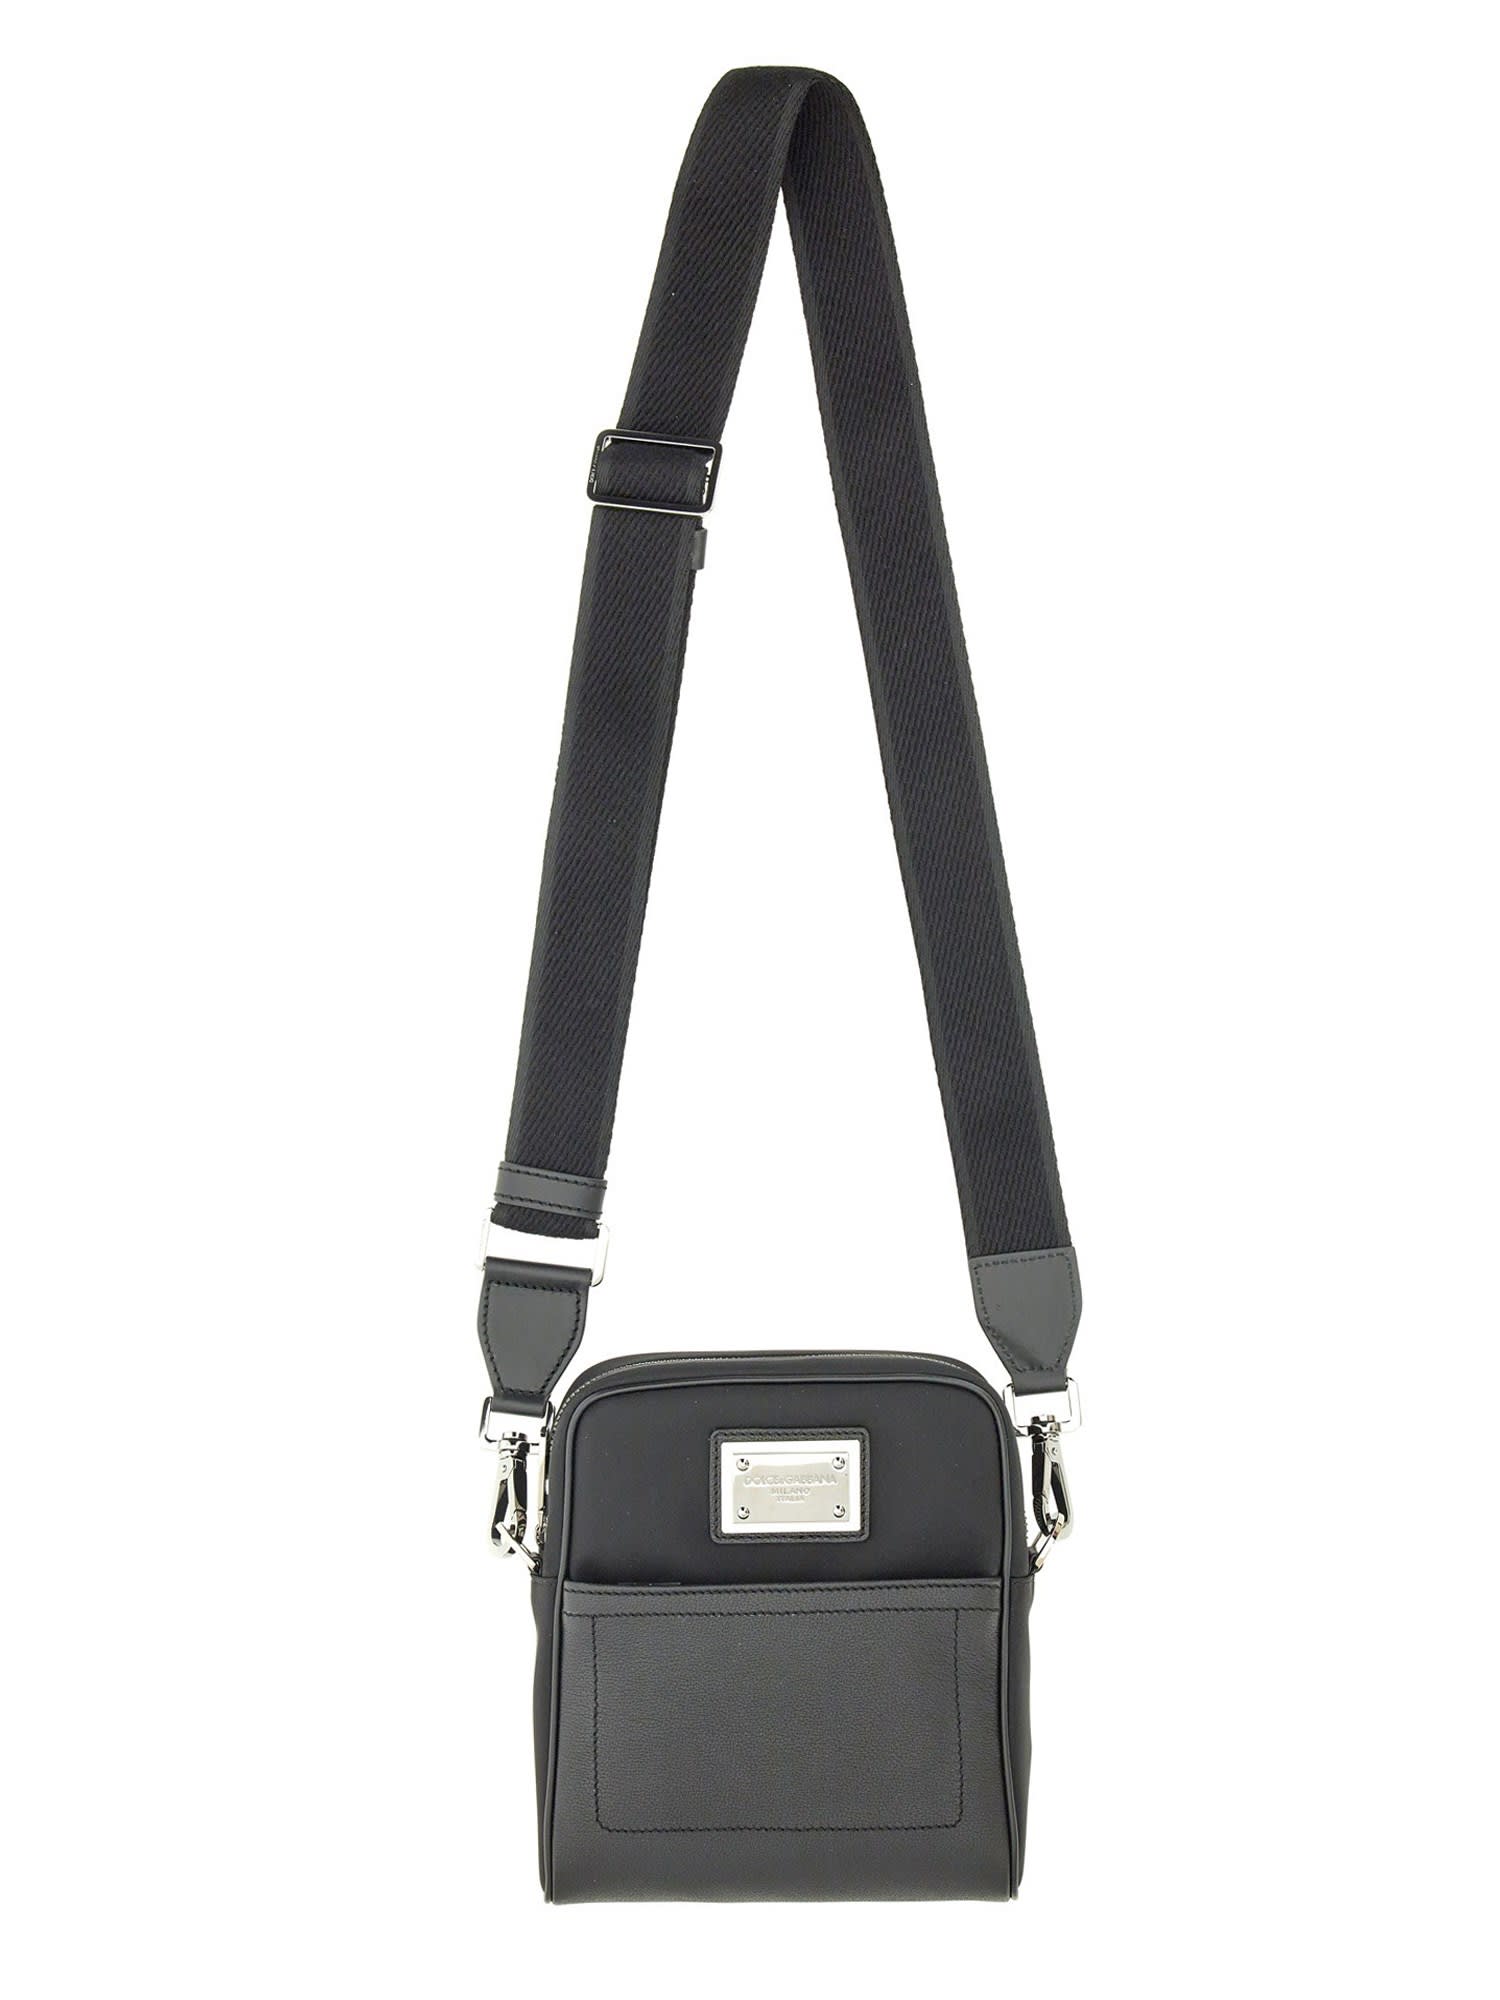 Dolce & Gabbana Shoulder Bag With Logo In Nero/nero